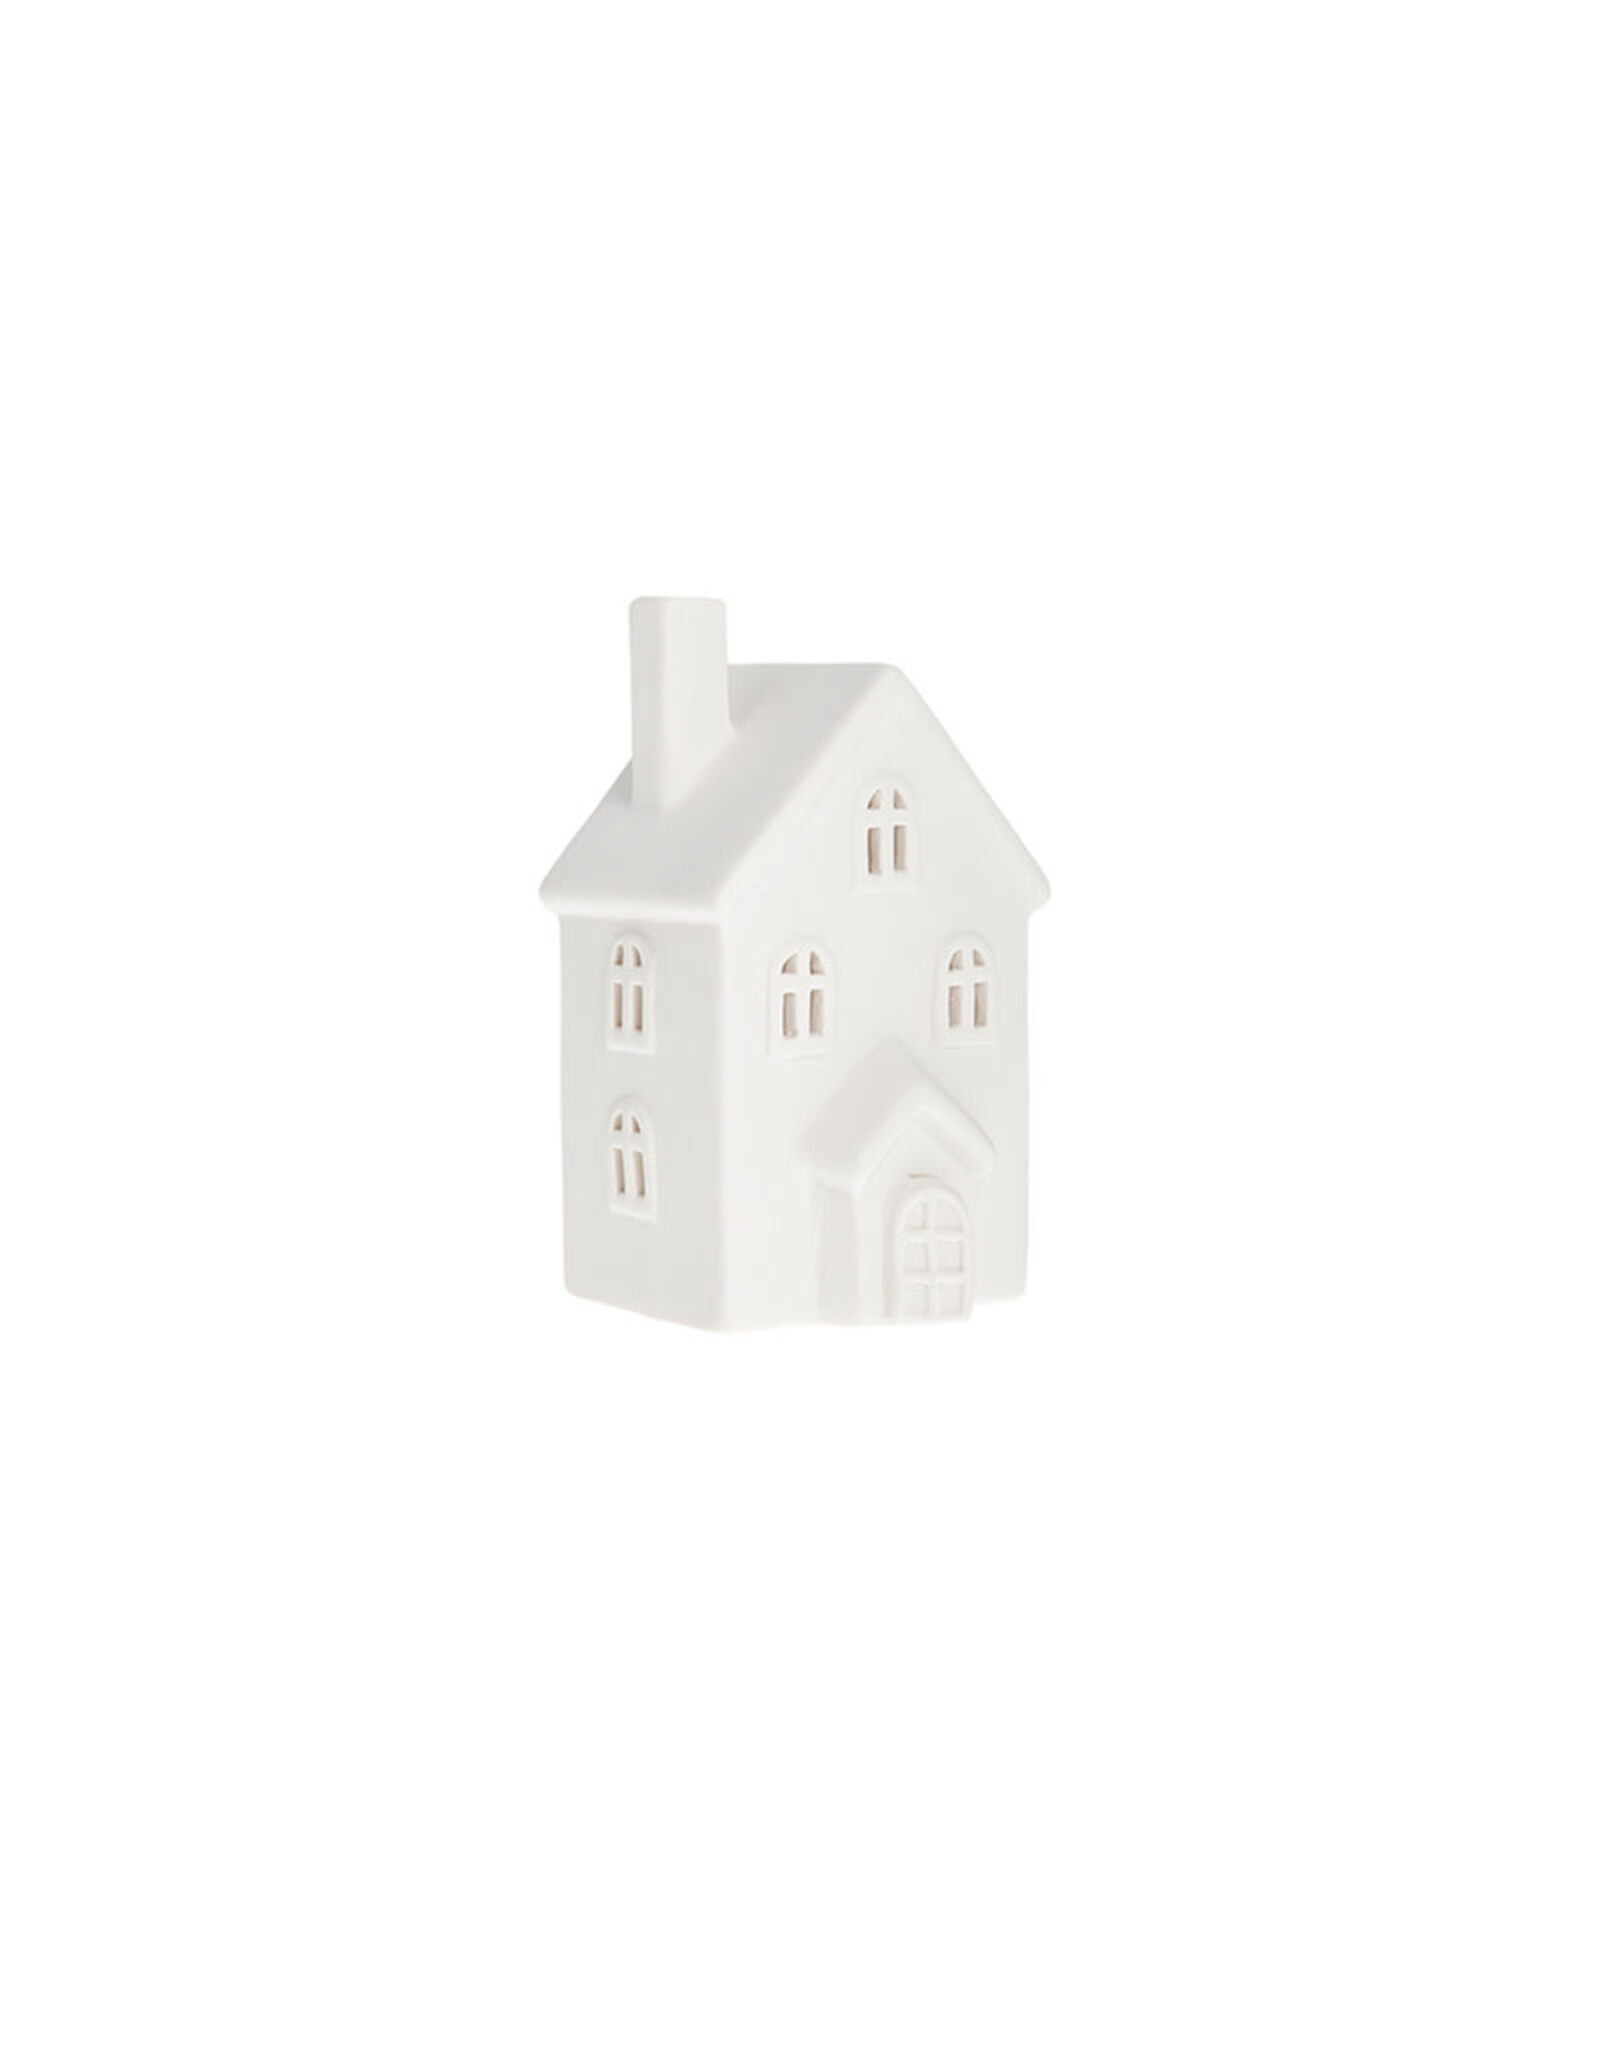 Storefactory Byn N° 12 White Ceramic House